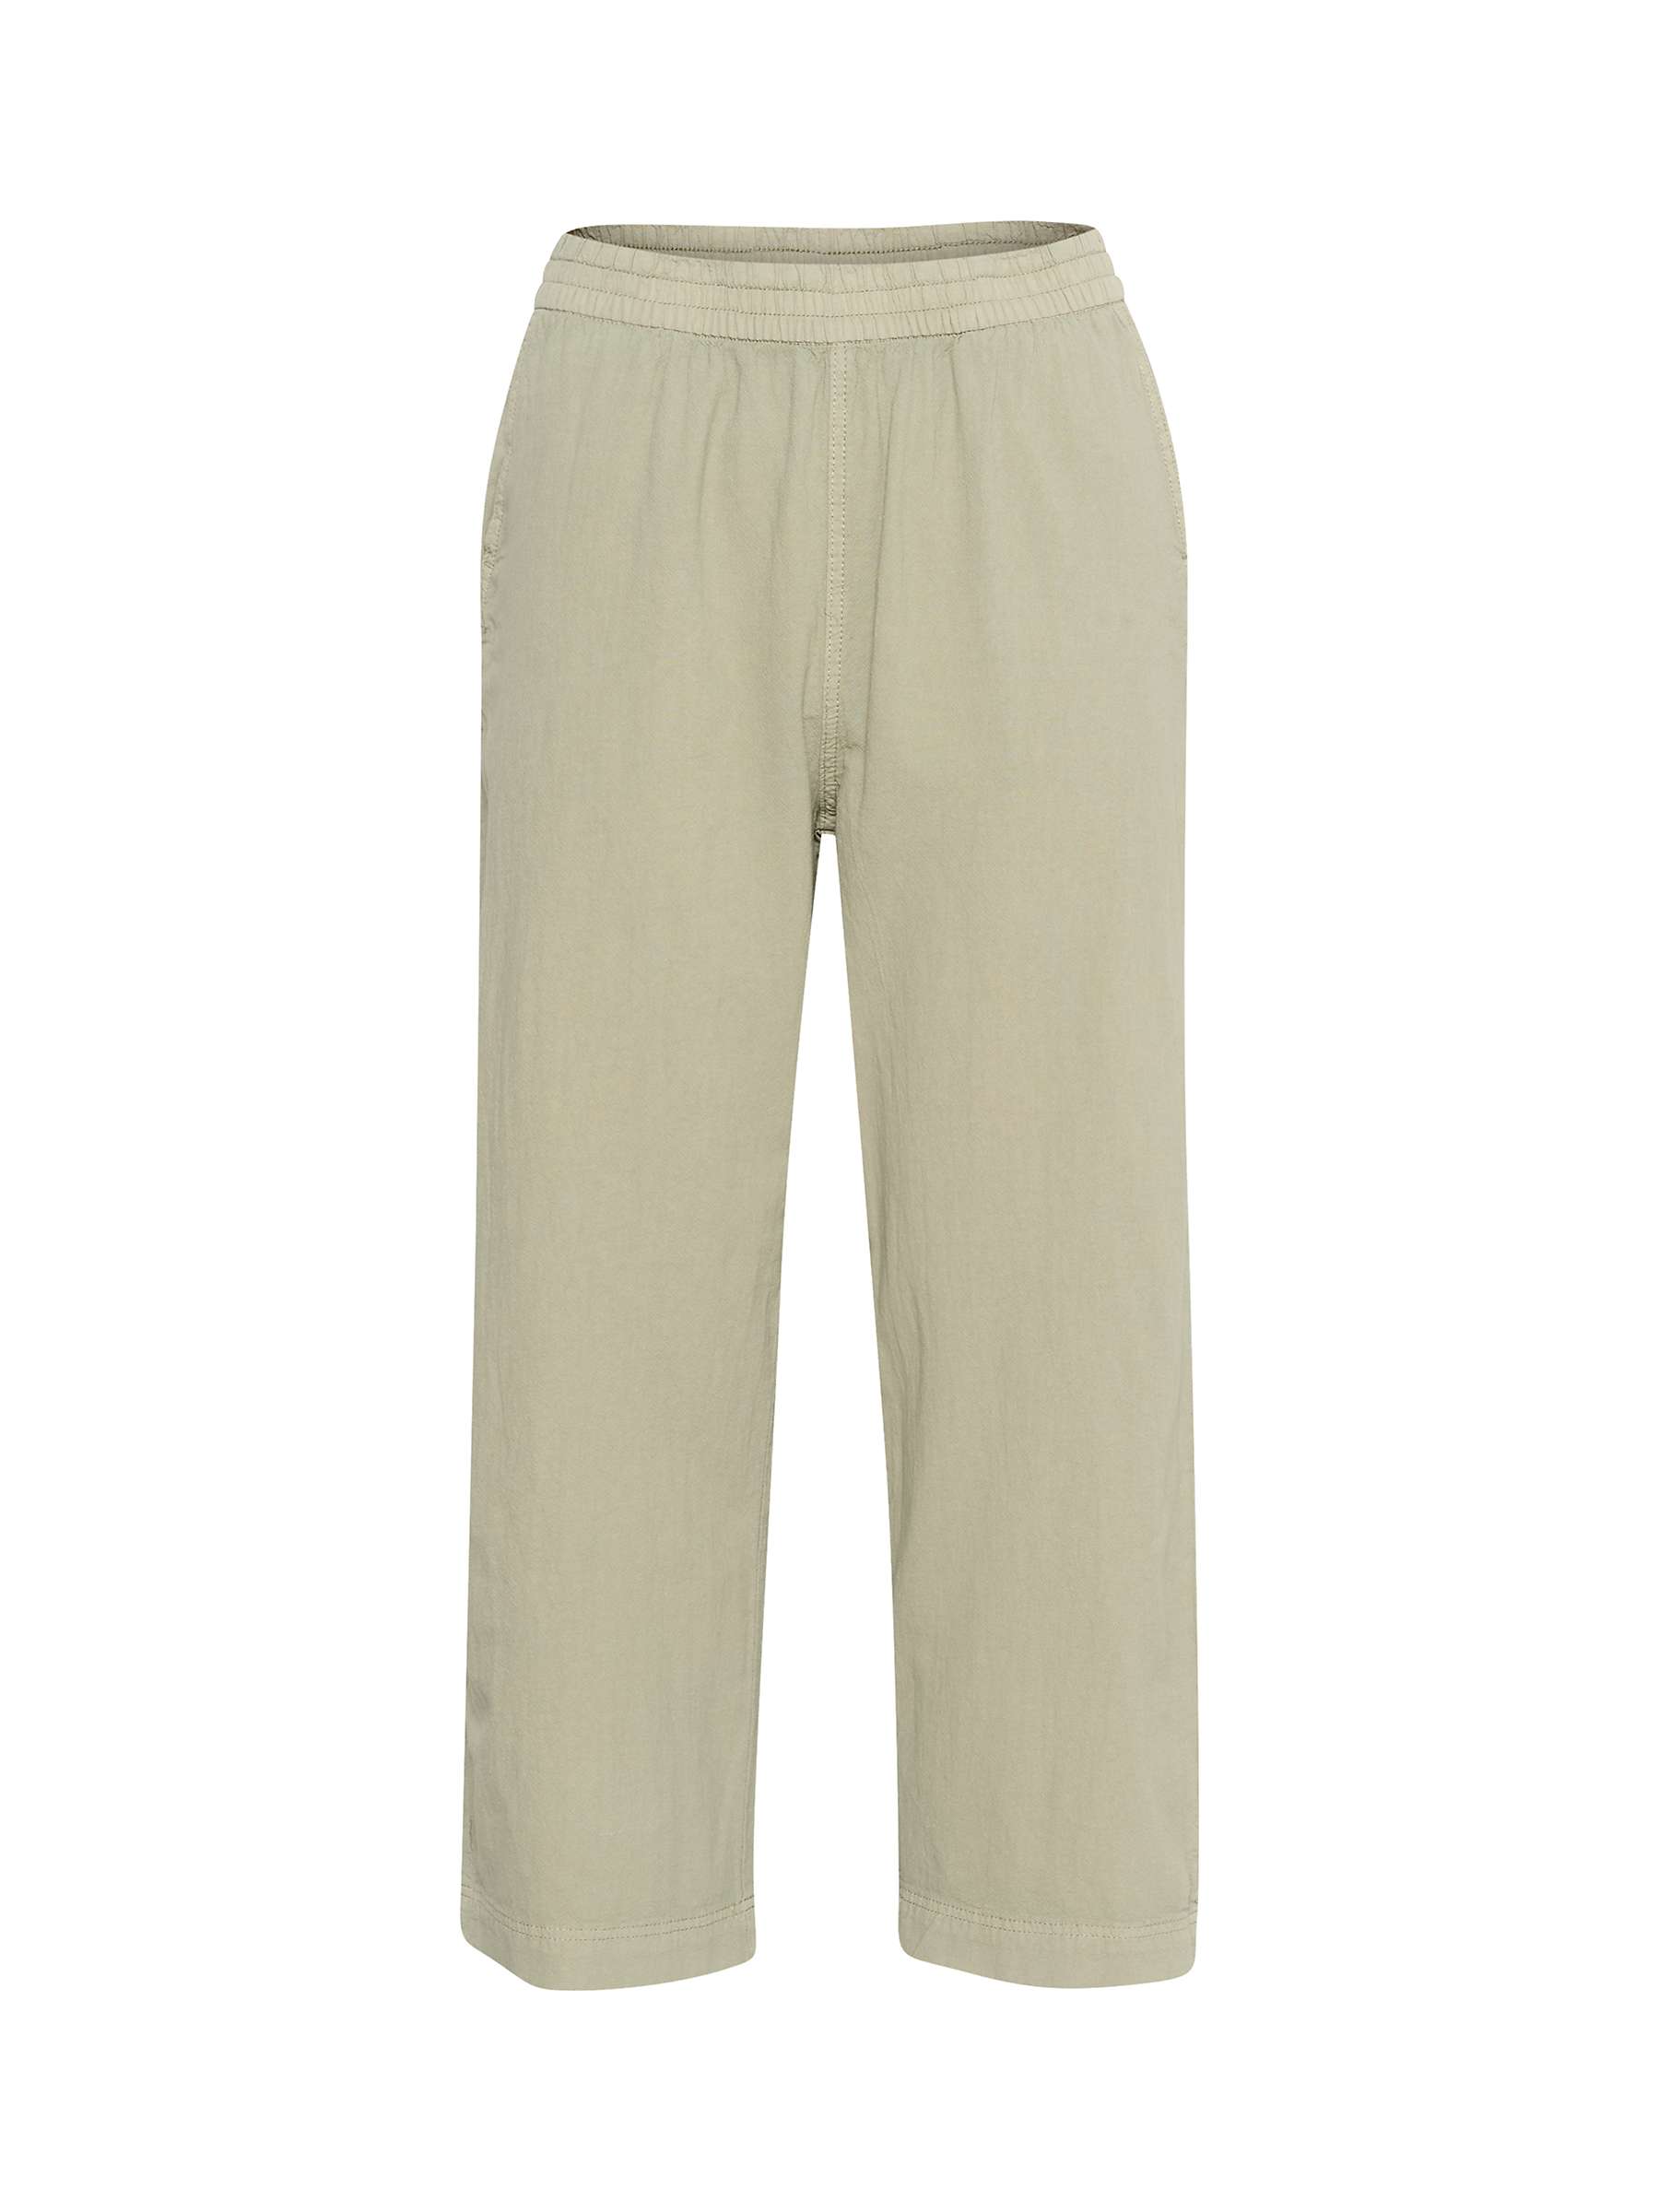 Buy KAFFE Naya Cropped Trousers Online at johnlewis.com